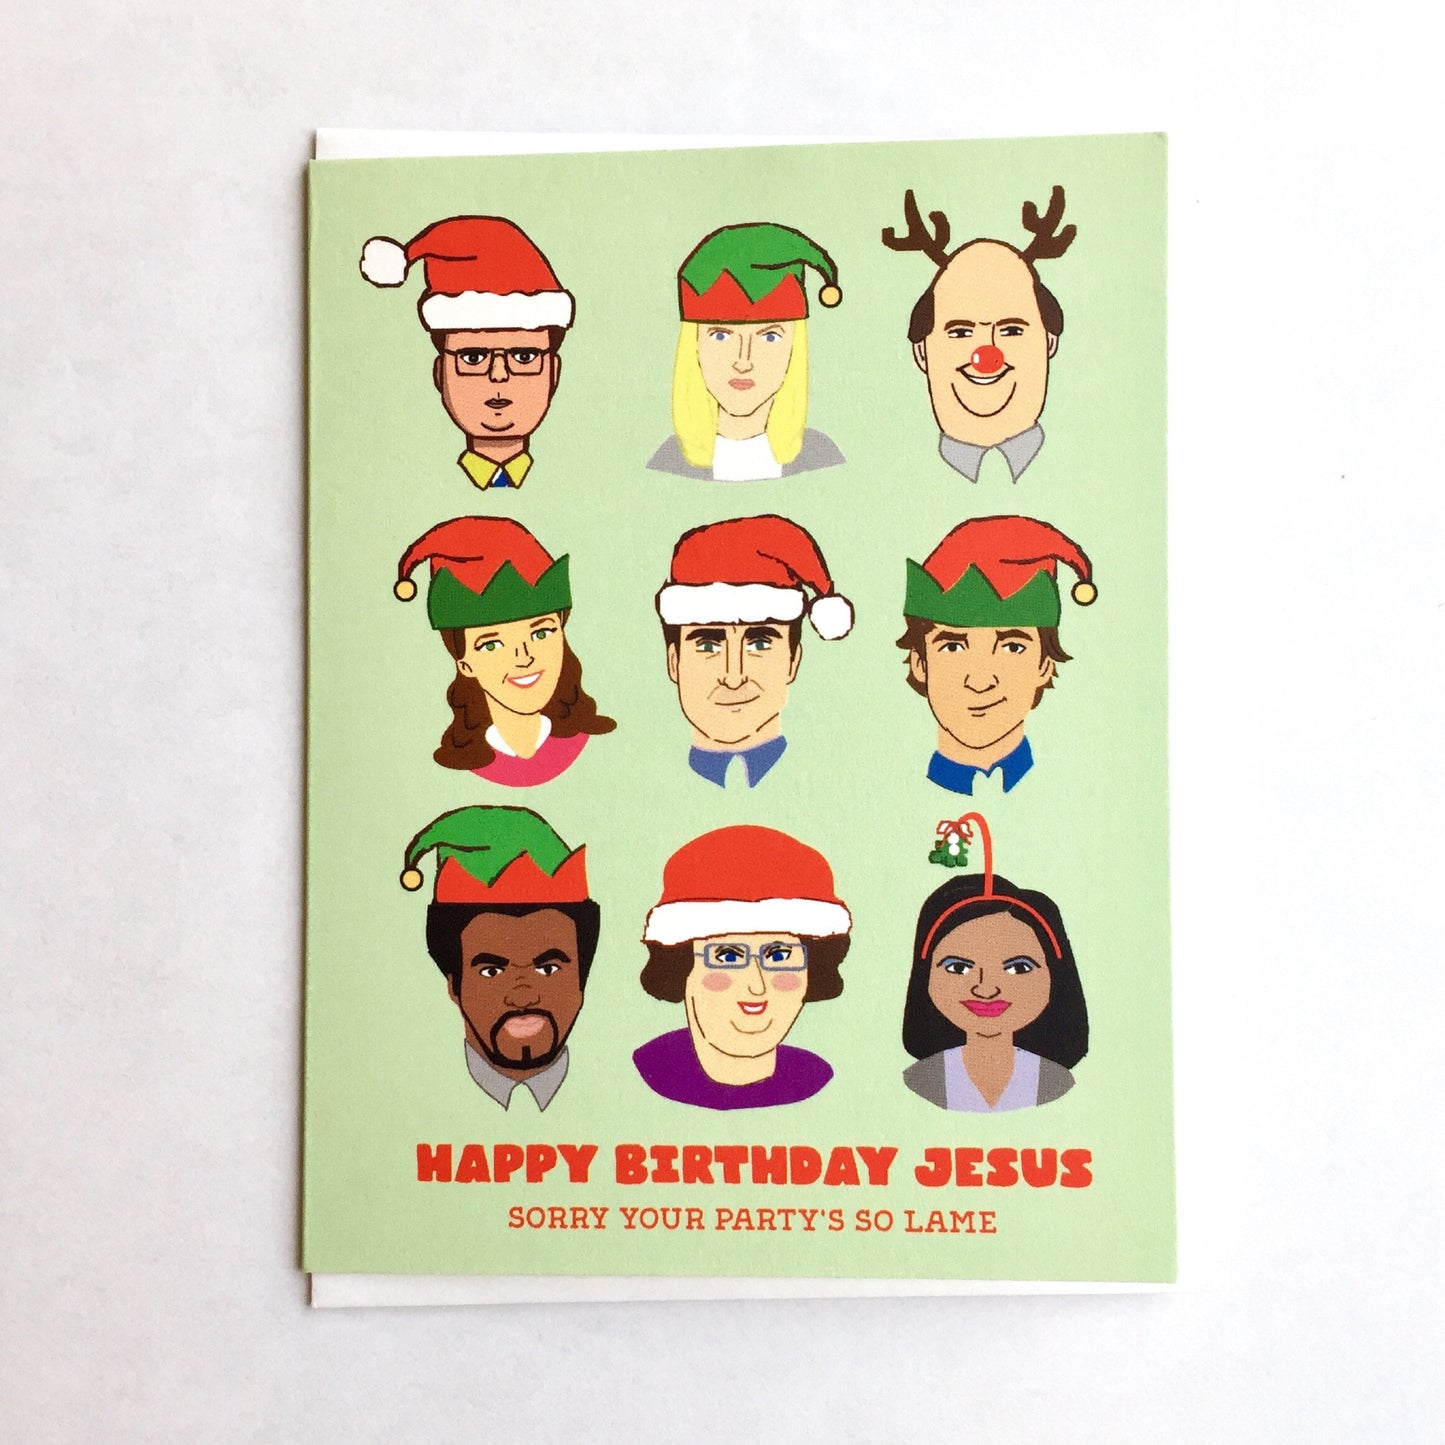 The Office Christmas Card - the office tv show xmas card, dunder mifflin card, dwight pam jim michael card